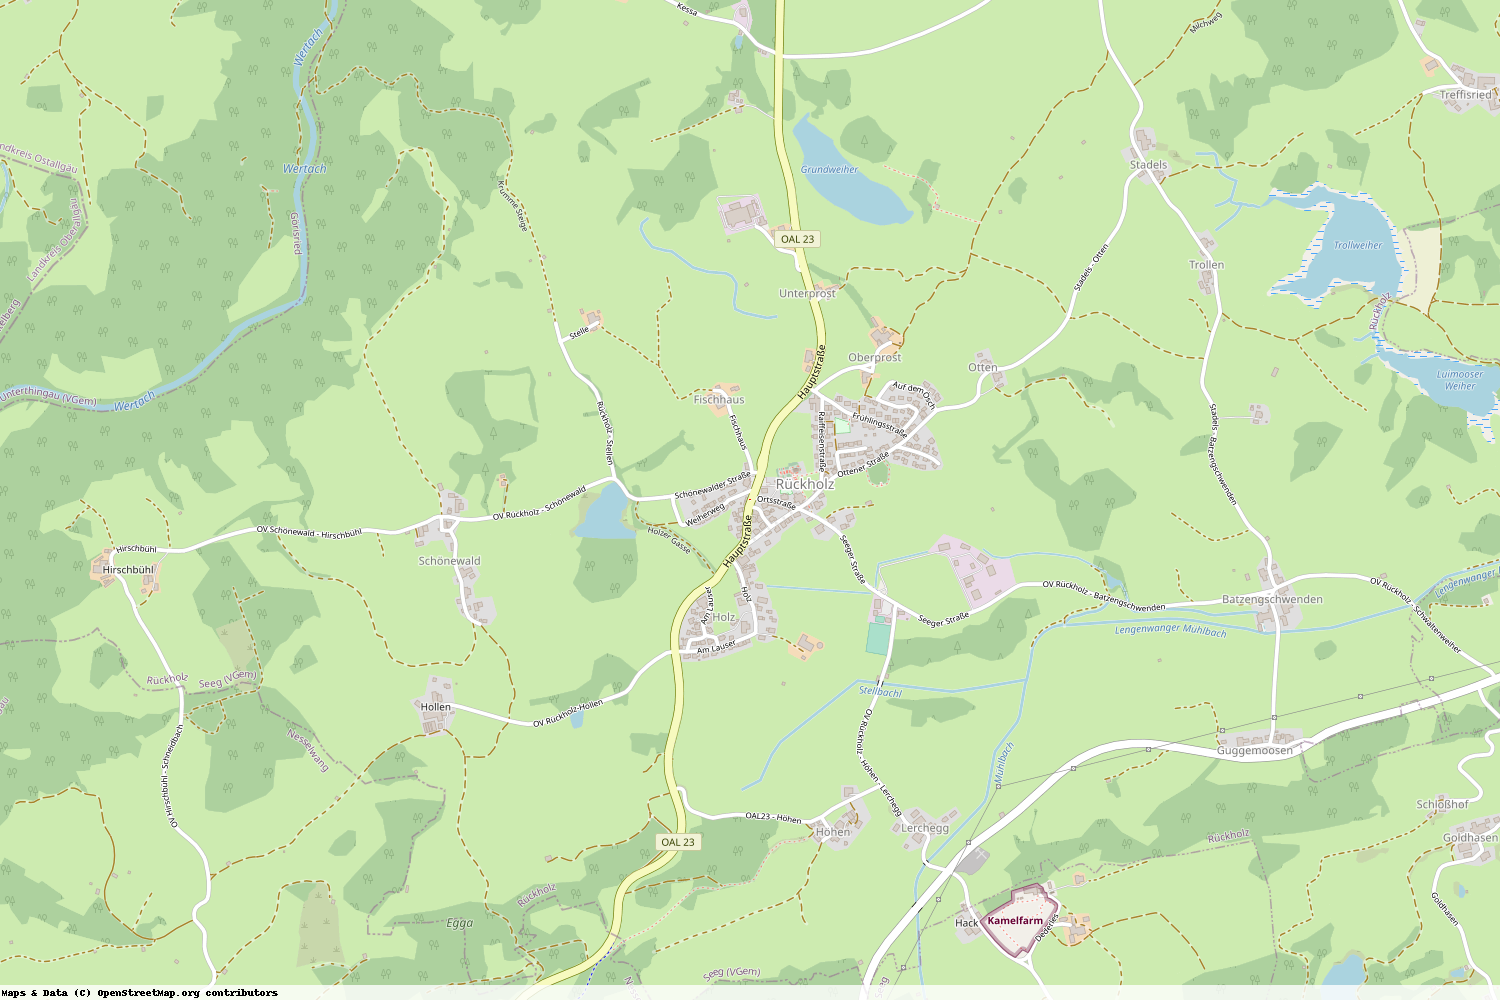 Ist gerade Stromausfall in Bayern - Ostallgäu - Rückholz?